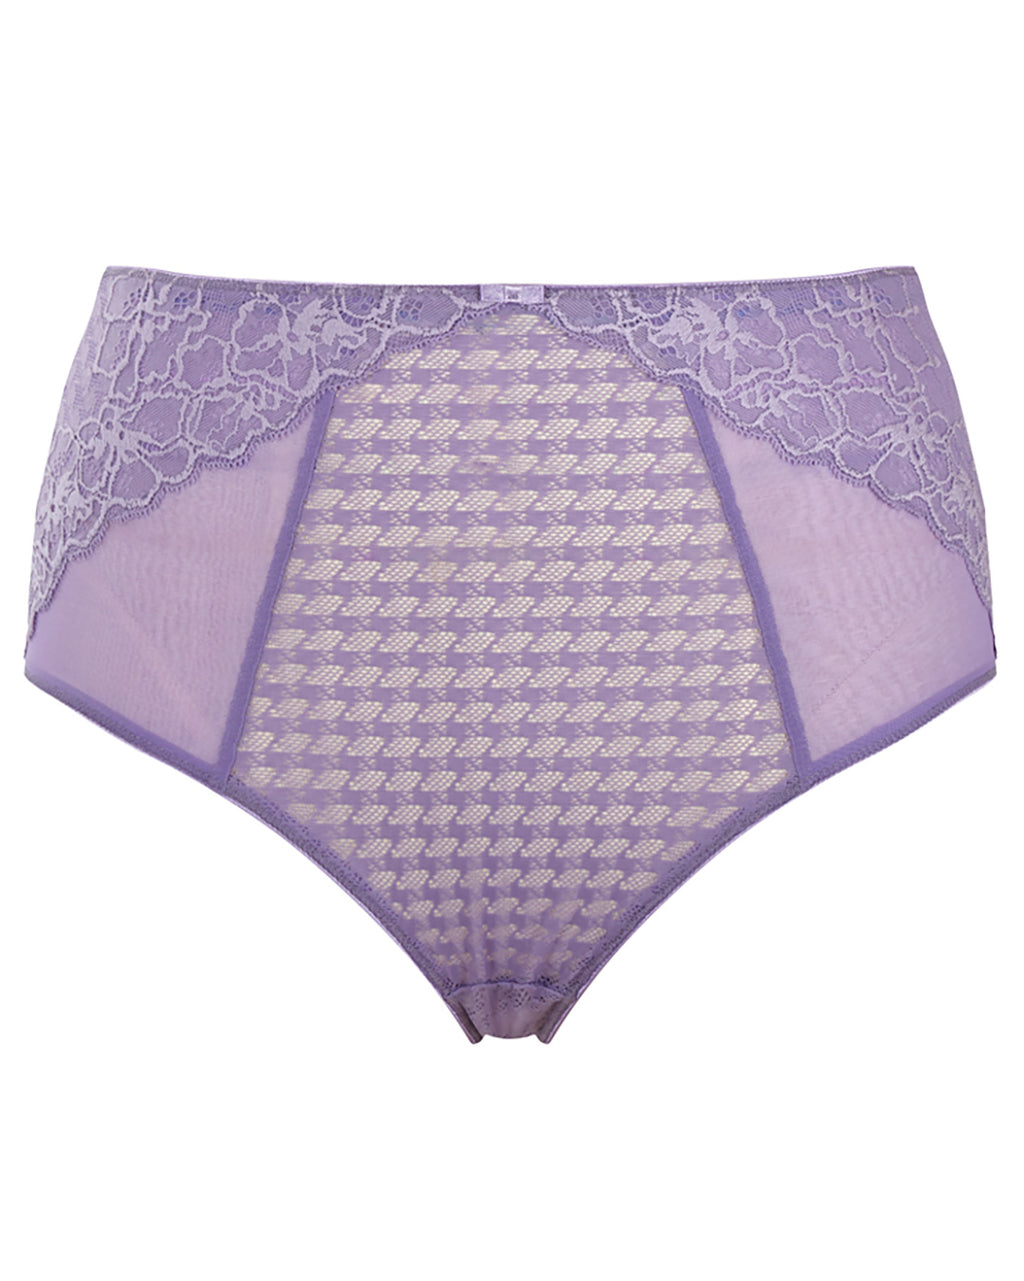 adviicd Plus Size Bras Womens Seamed Soft Cup Wirefree Cotton Bra Purple 44  100D 